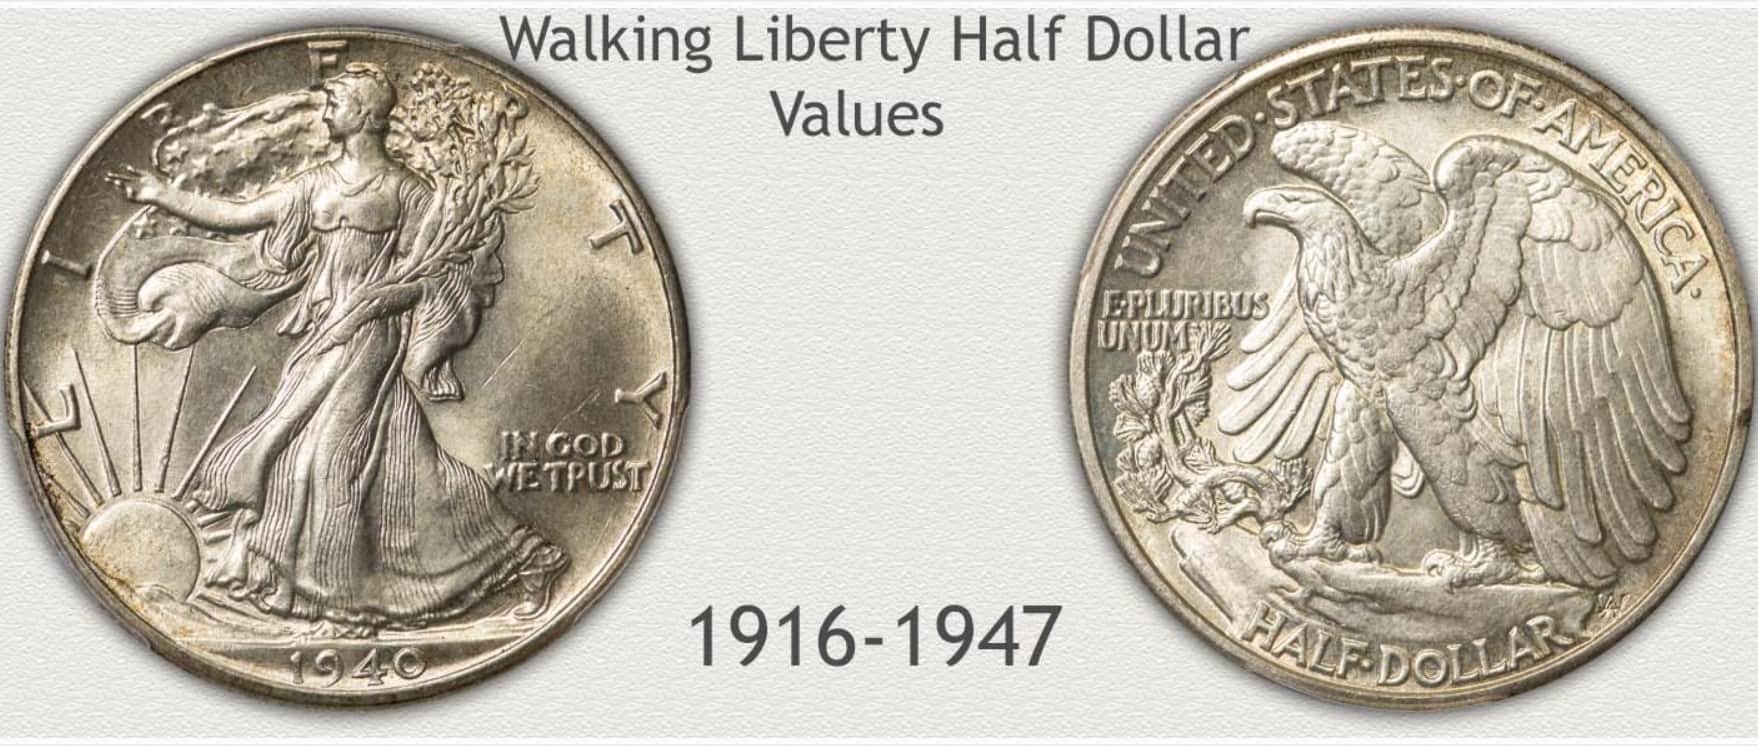 Walking Liberty half dollar value